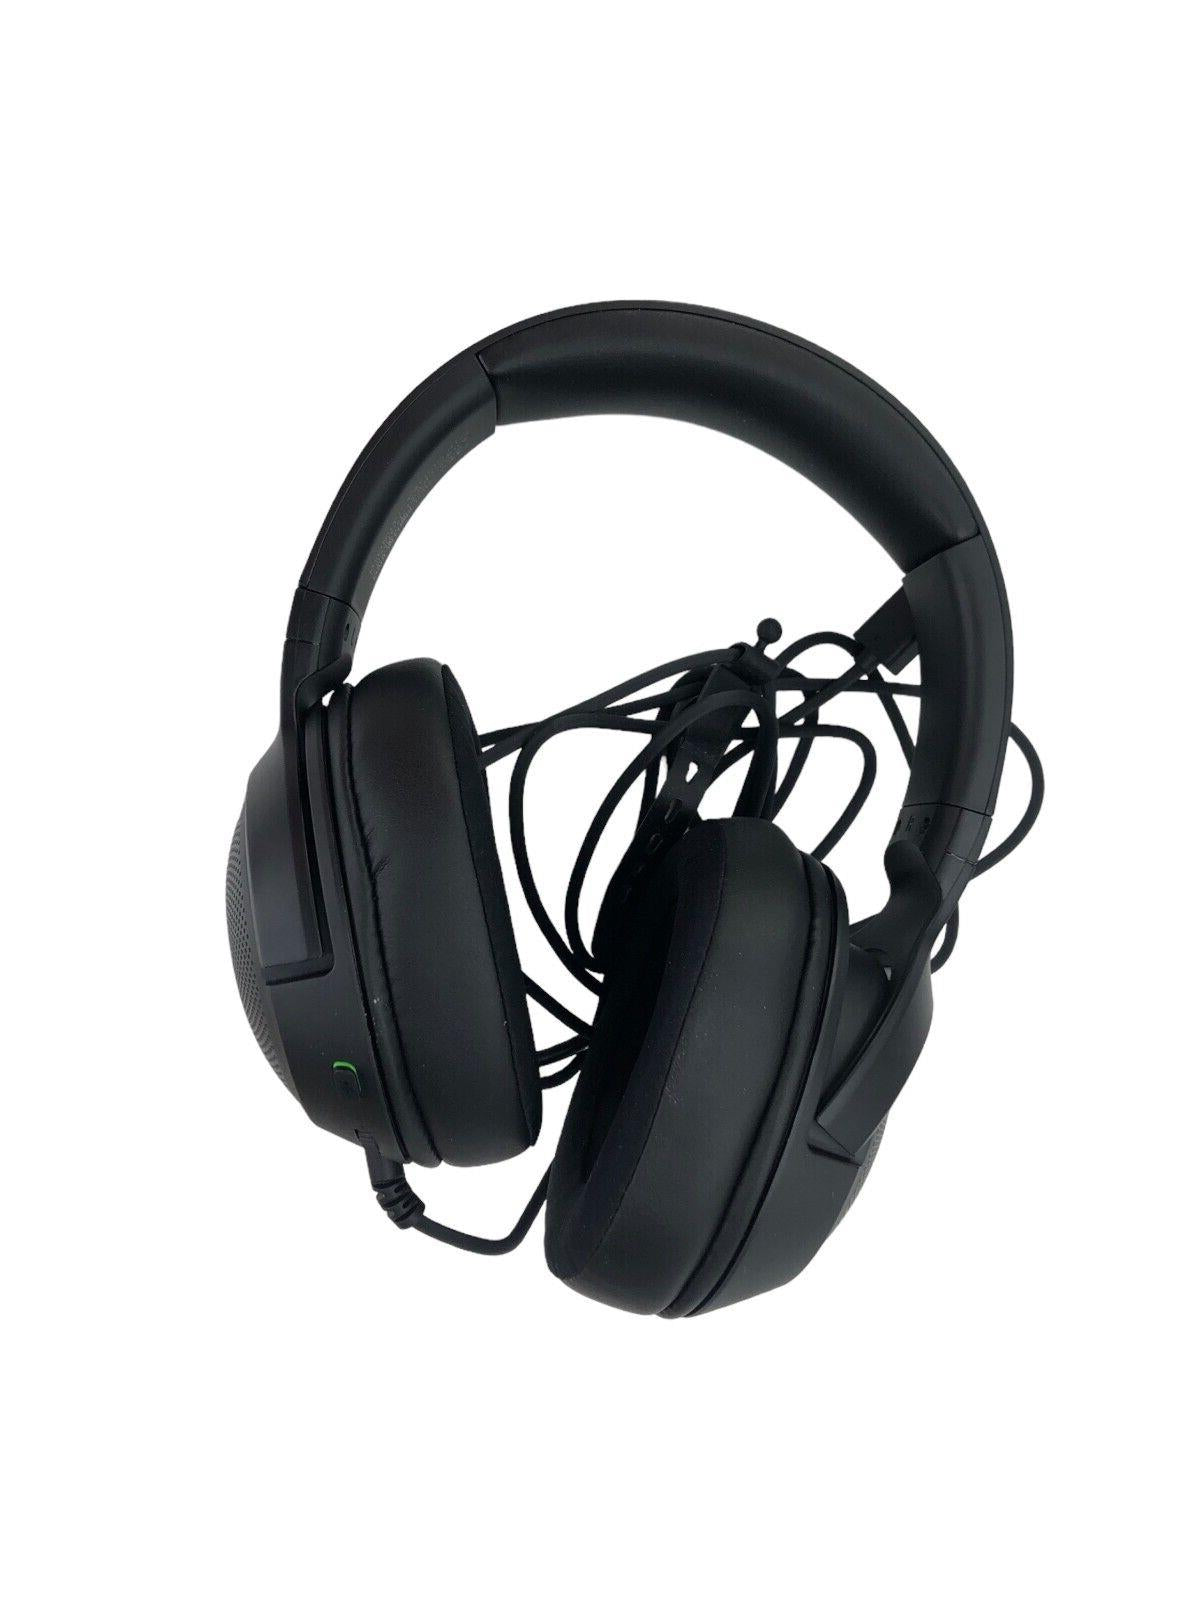 Razer Kraken V3 X Wired USB Gaming Headset 7.1 Surround Sound Black Headphones